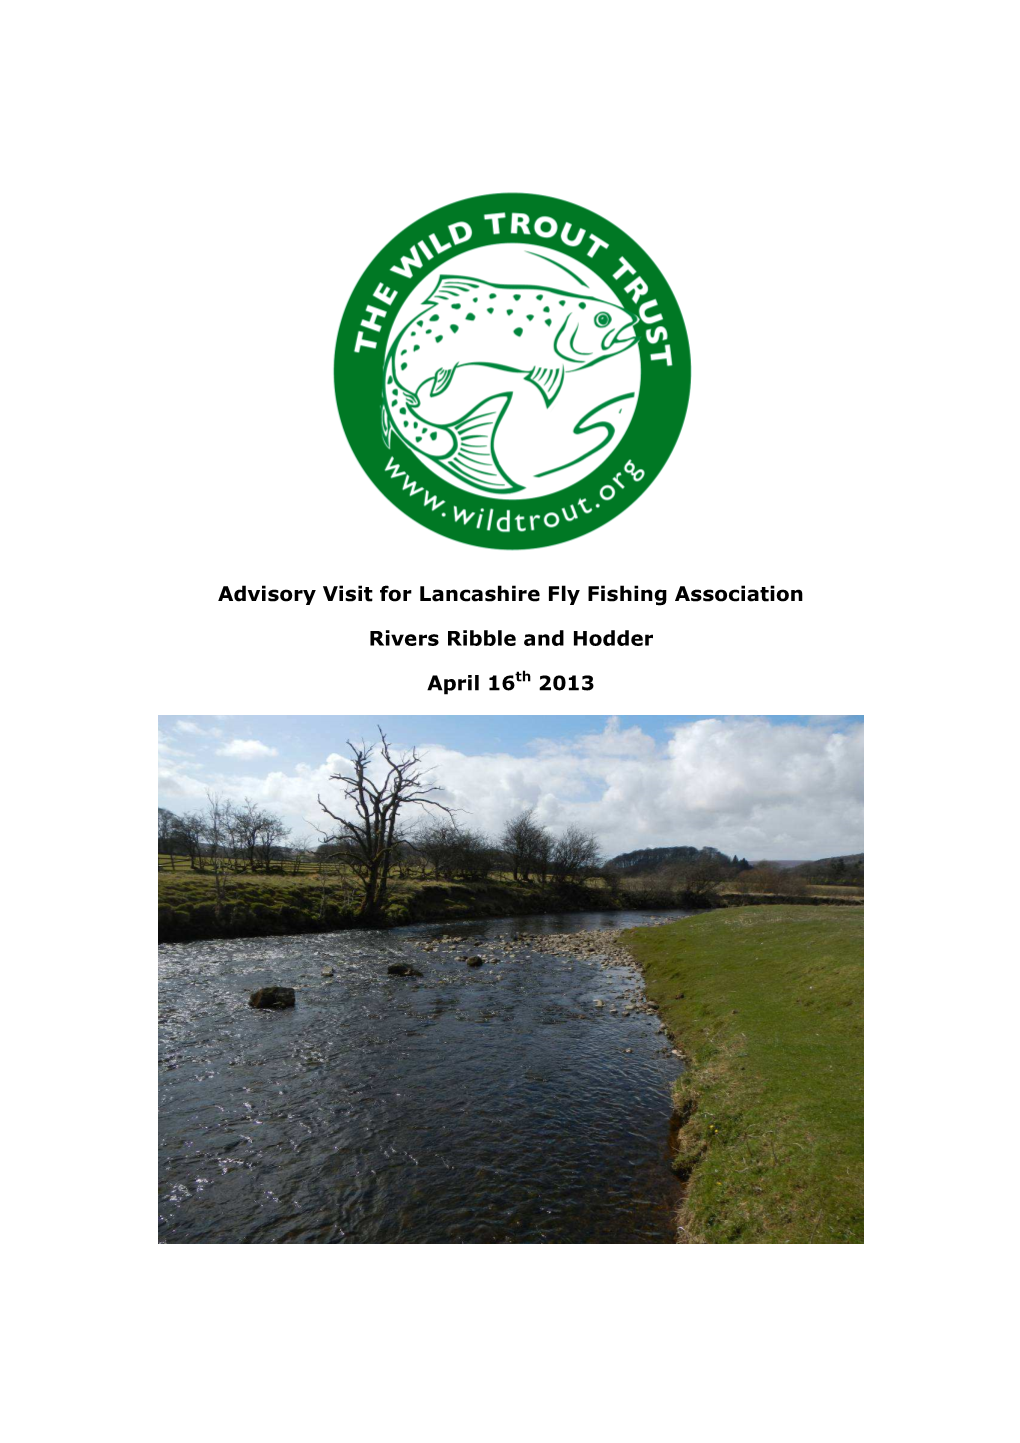 Advisory Visit for Lancashire Fly Fishing Association Rivers Ribble